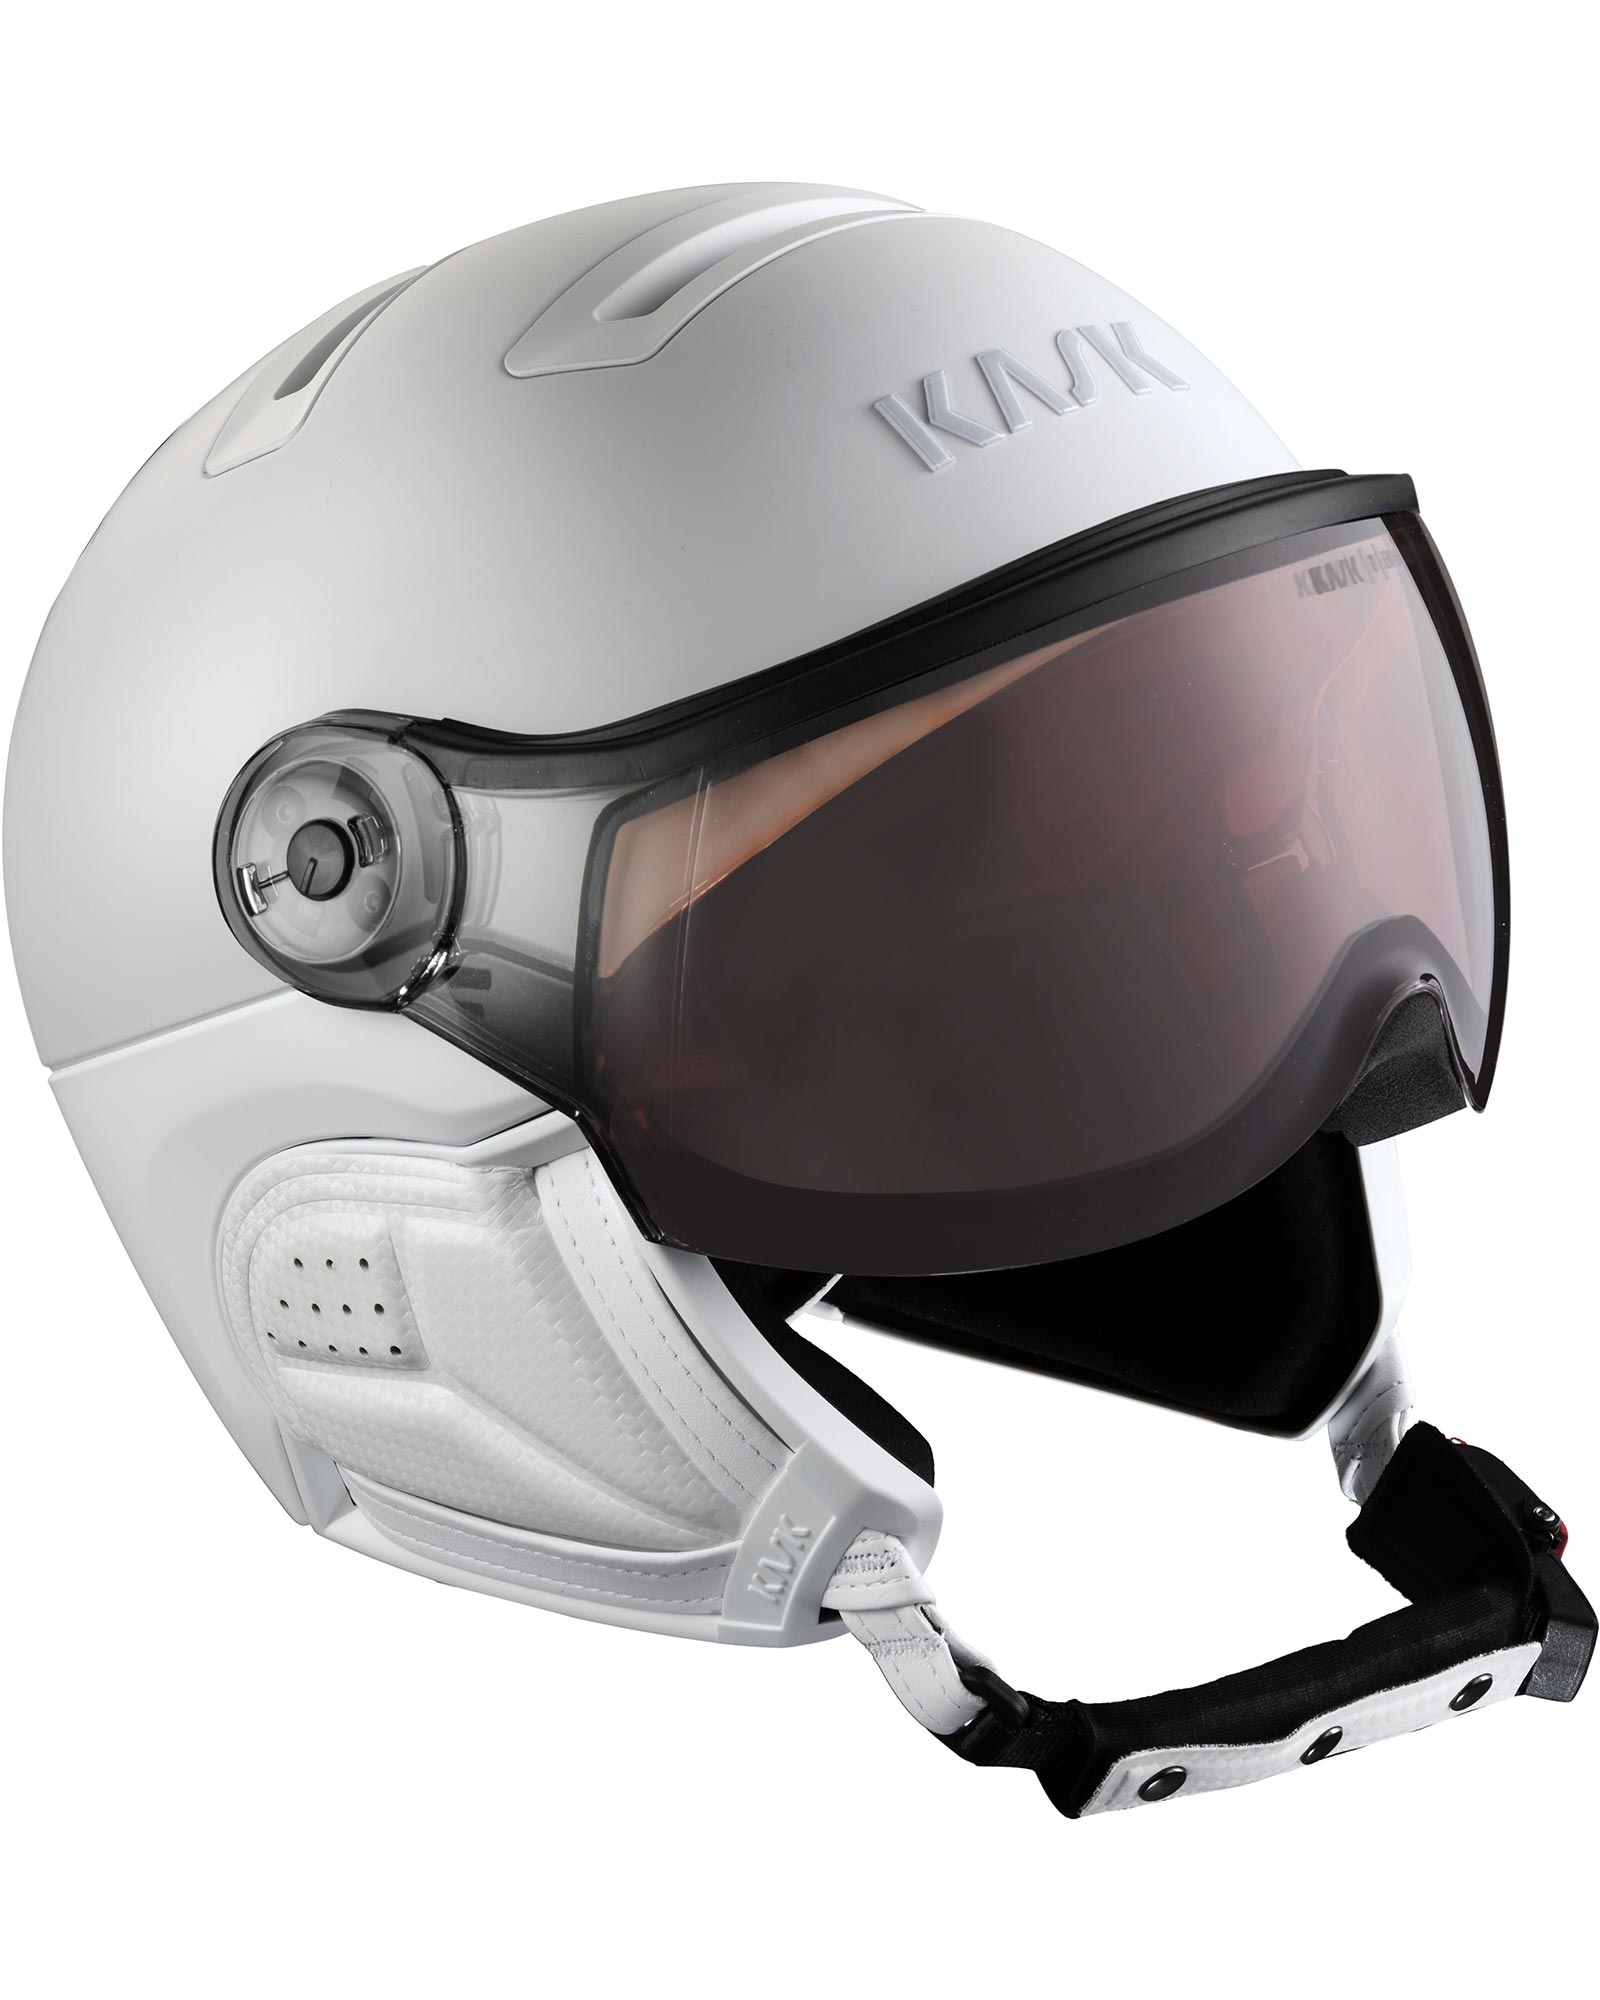 KASK Class Shadow Helmet - Matte White/Silver Visor S